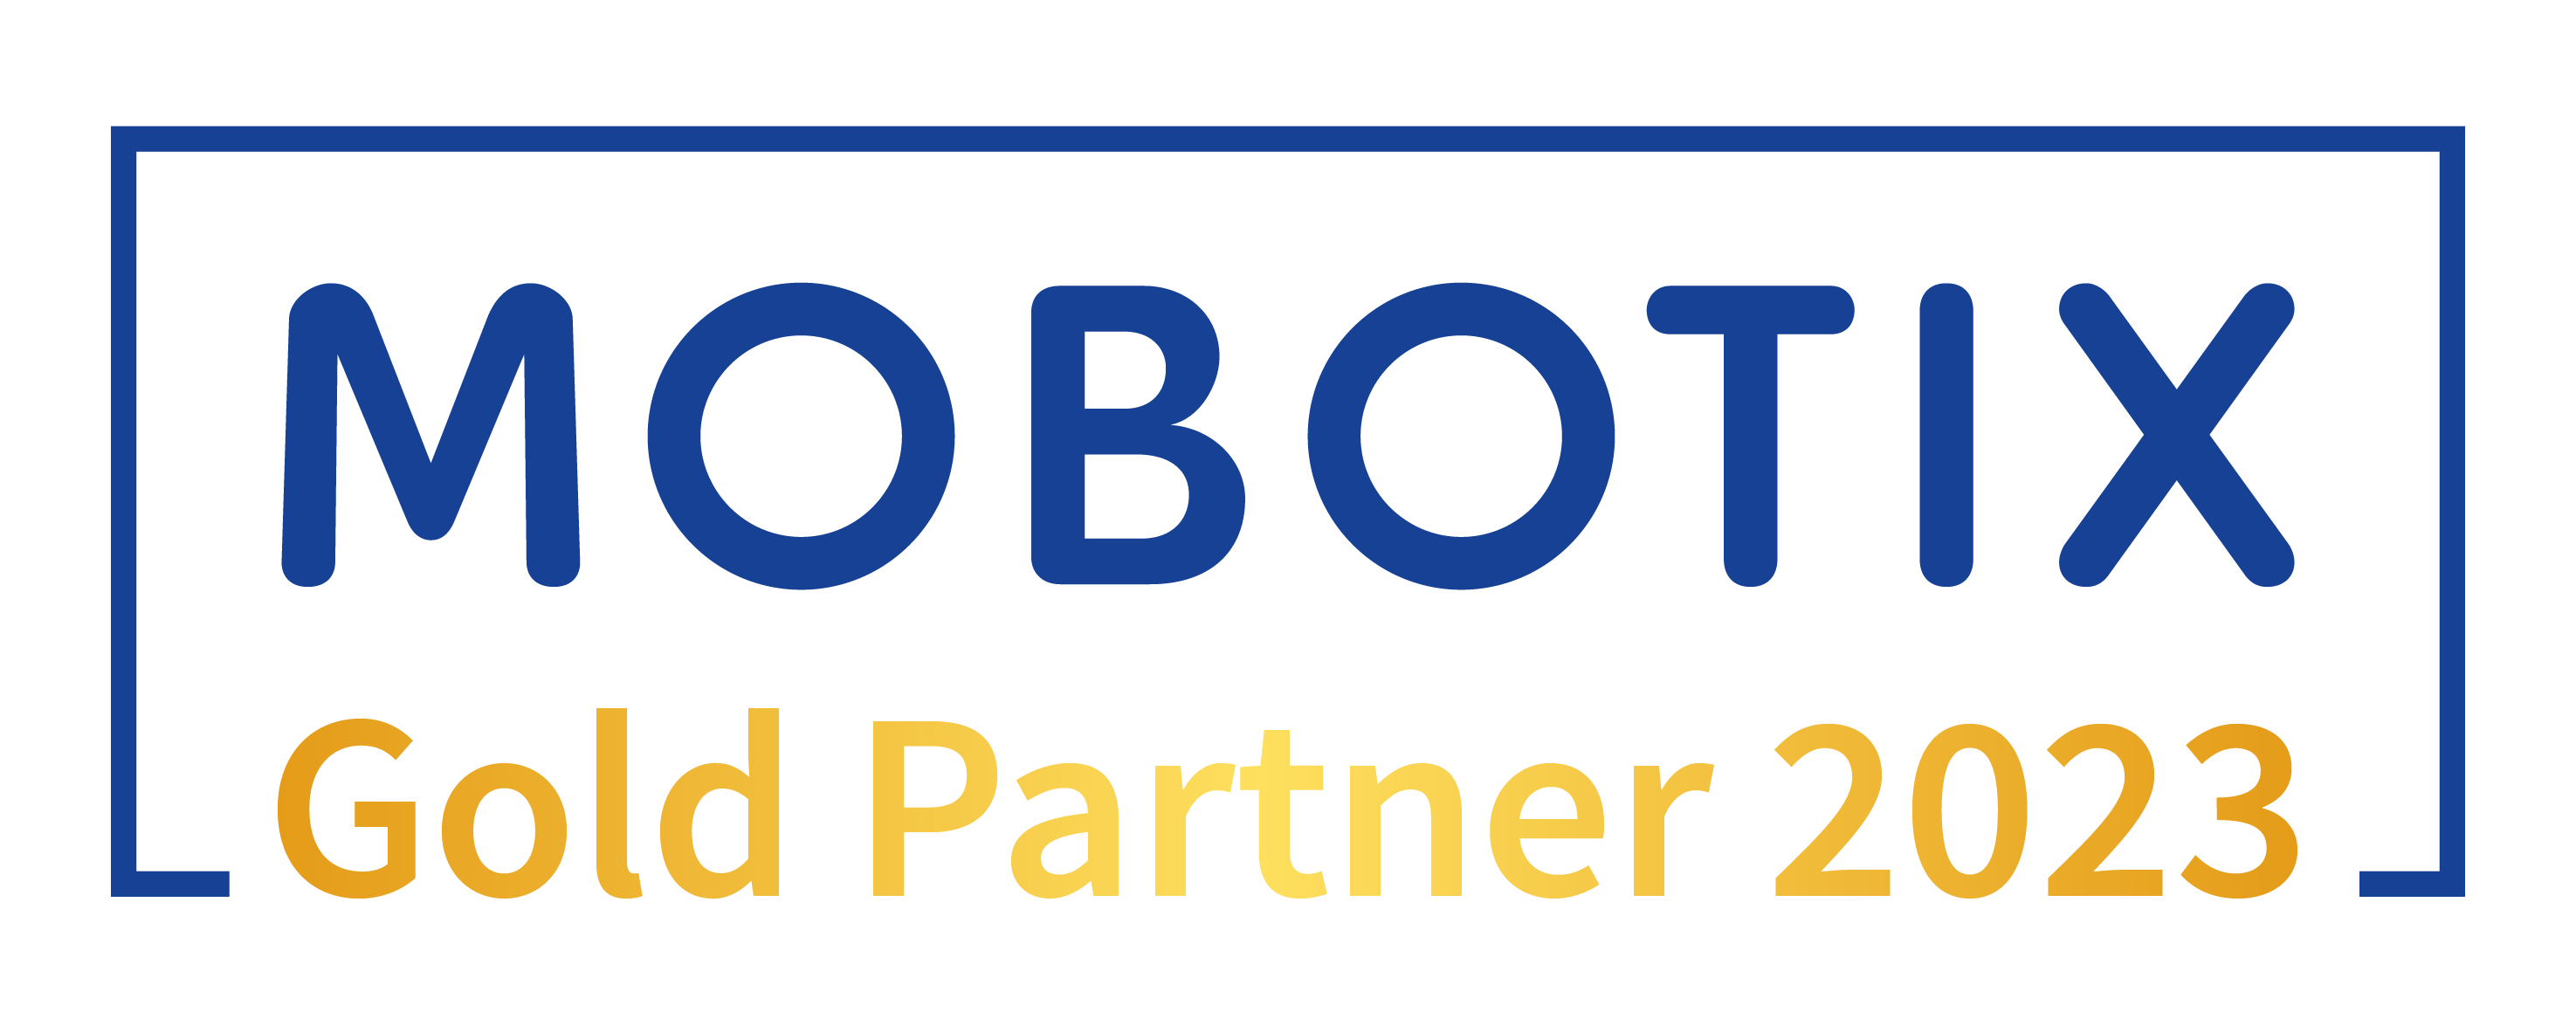 Mobotix Partner Logo Gold 2023